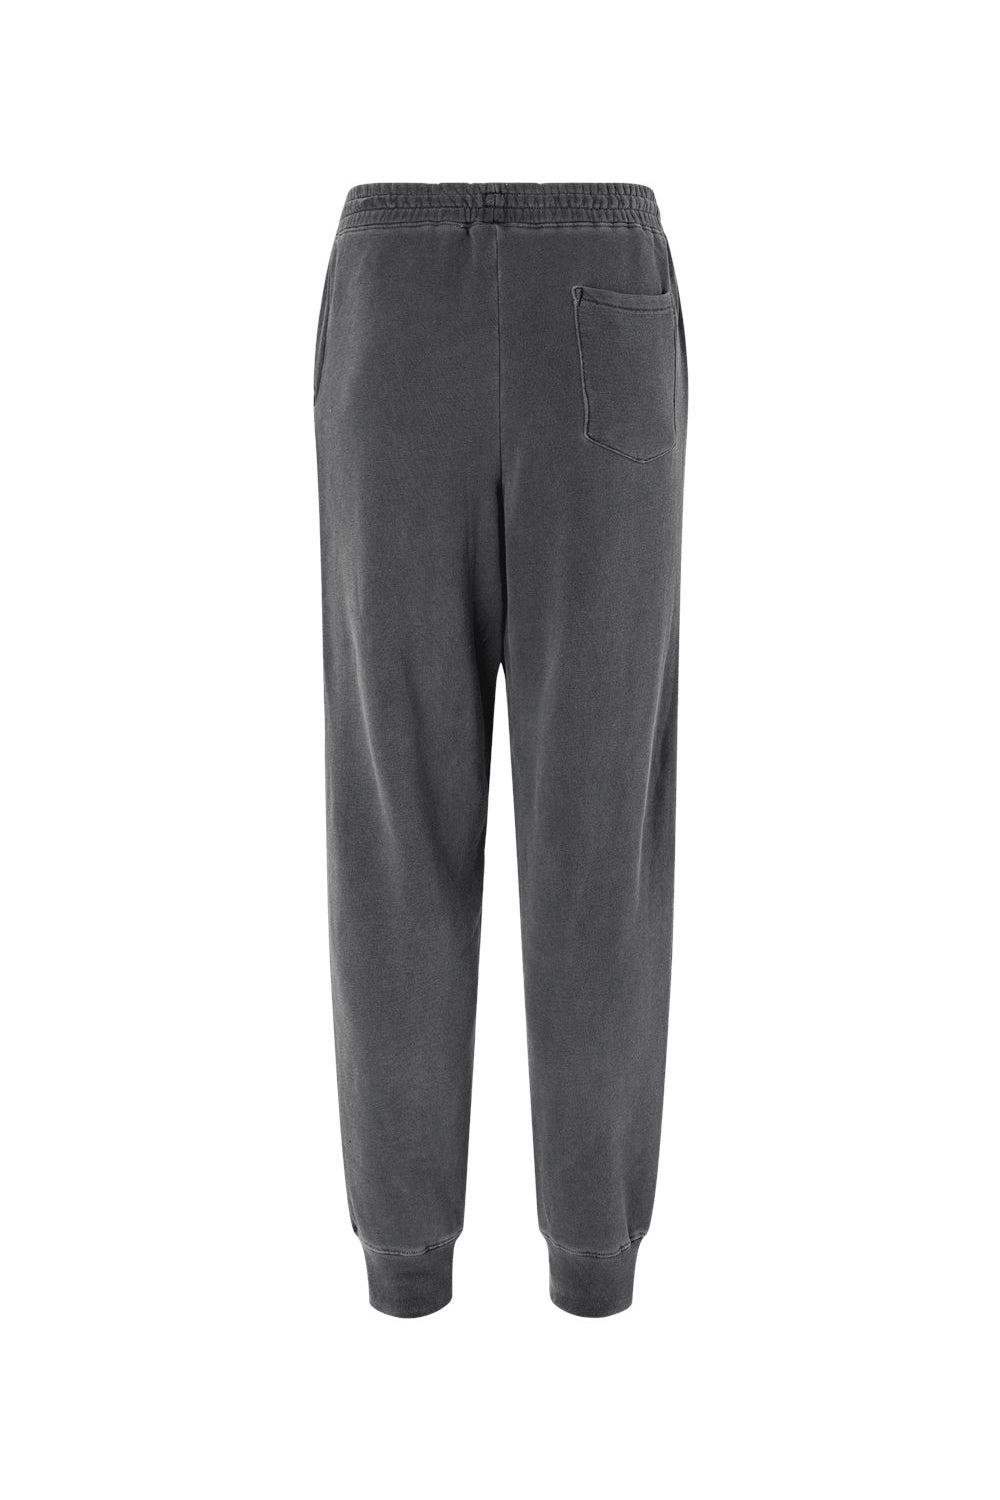 Independent Trading Co. PRM50PTPD Mens Pigment Dyed Fleece Sweatpants w/ Pockets Black Flat Back